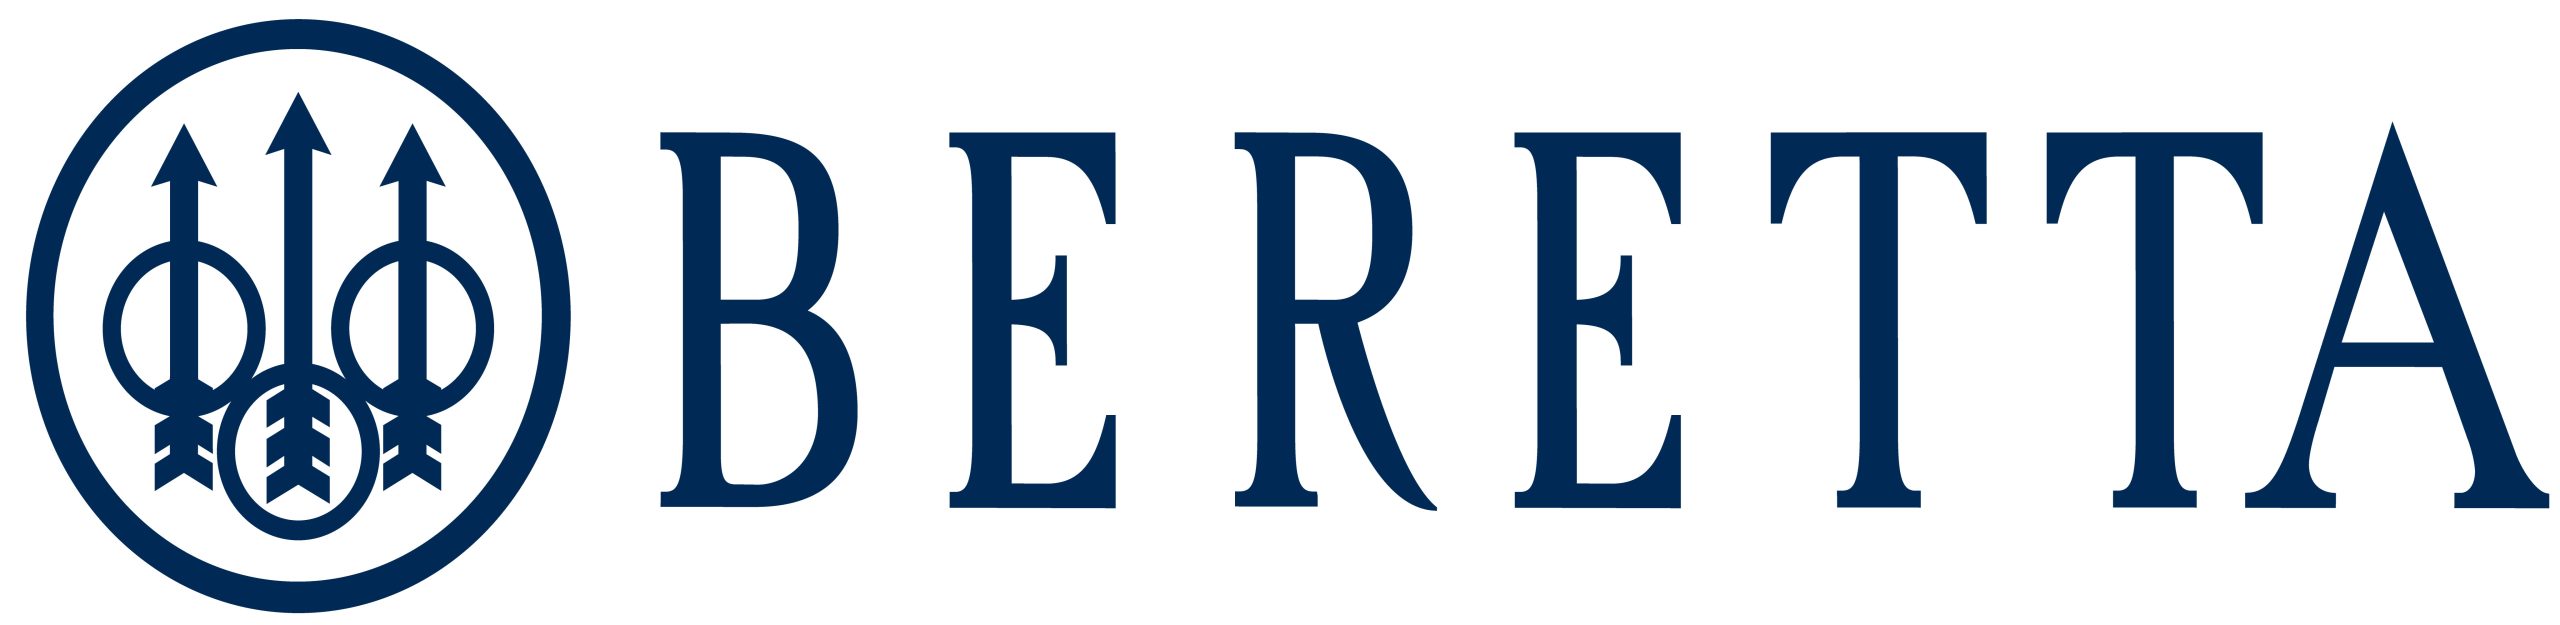 Beretta Trident Logo